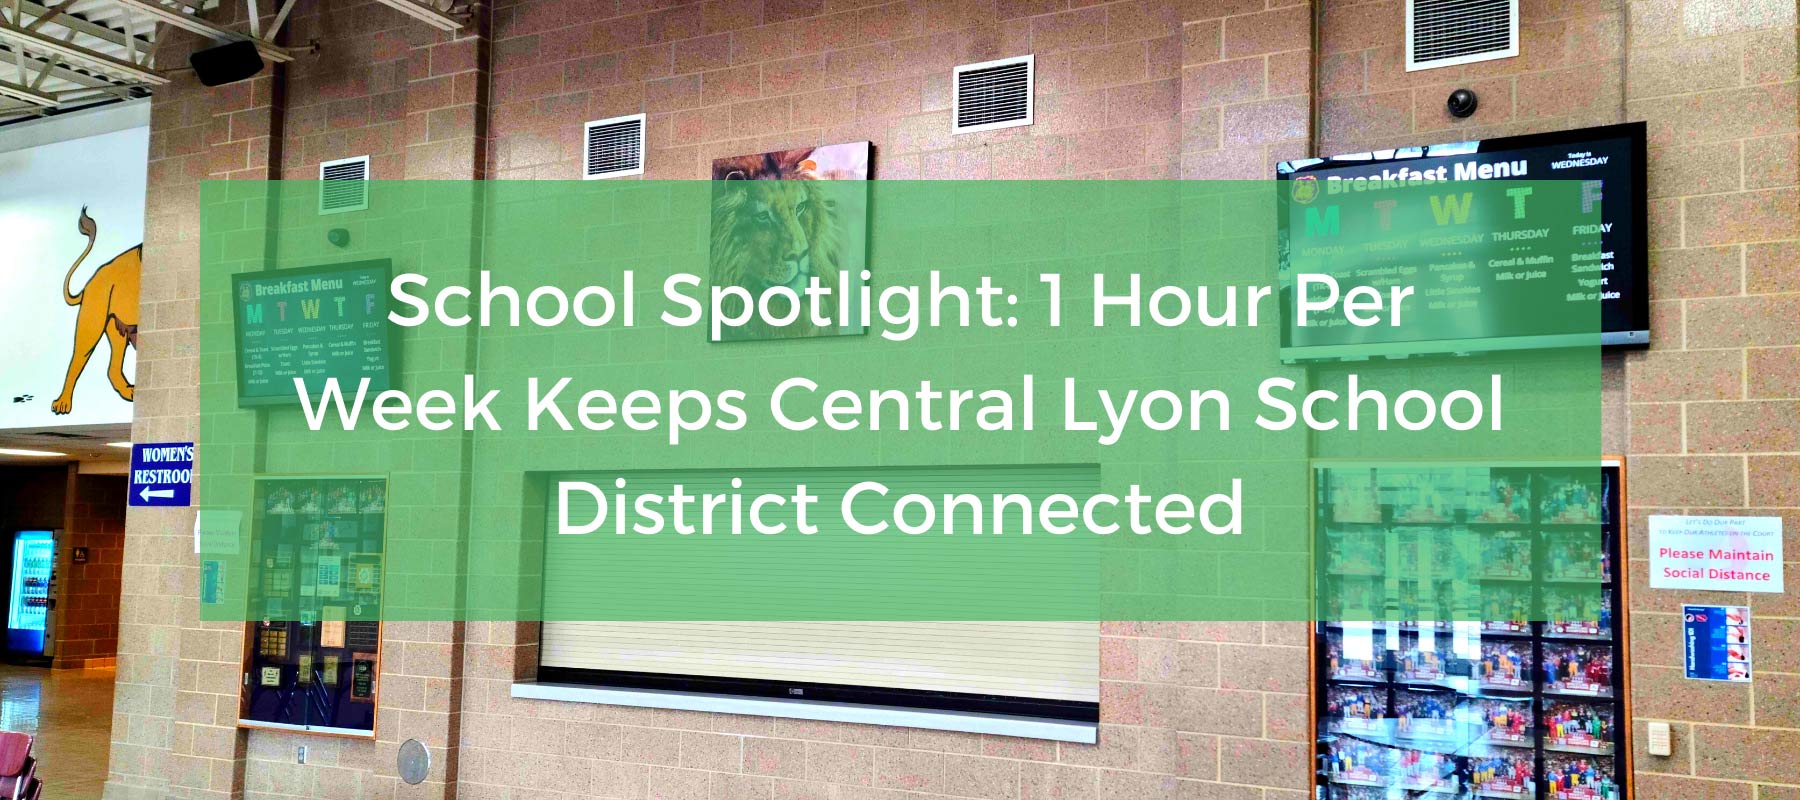 School Spotlight: 1 Hour Per Week Keeps Central Lyon School District Connected